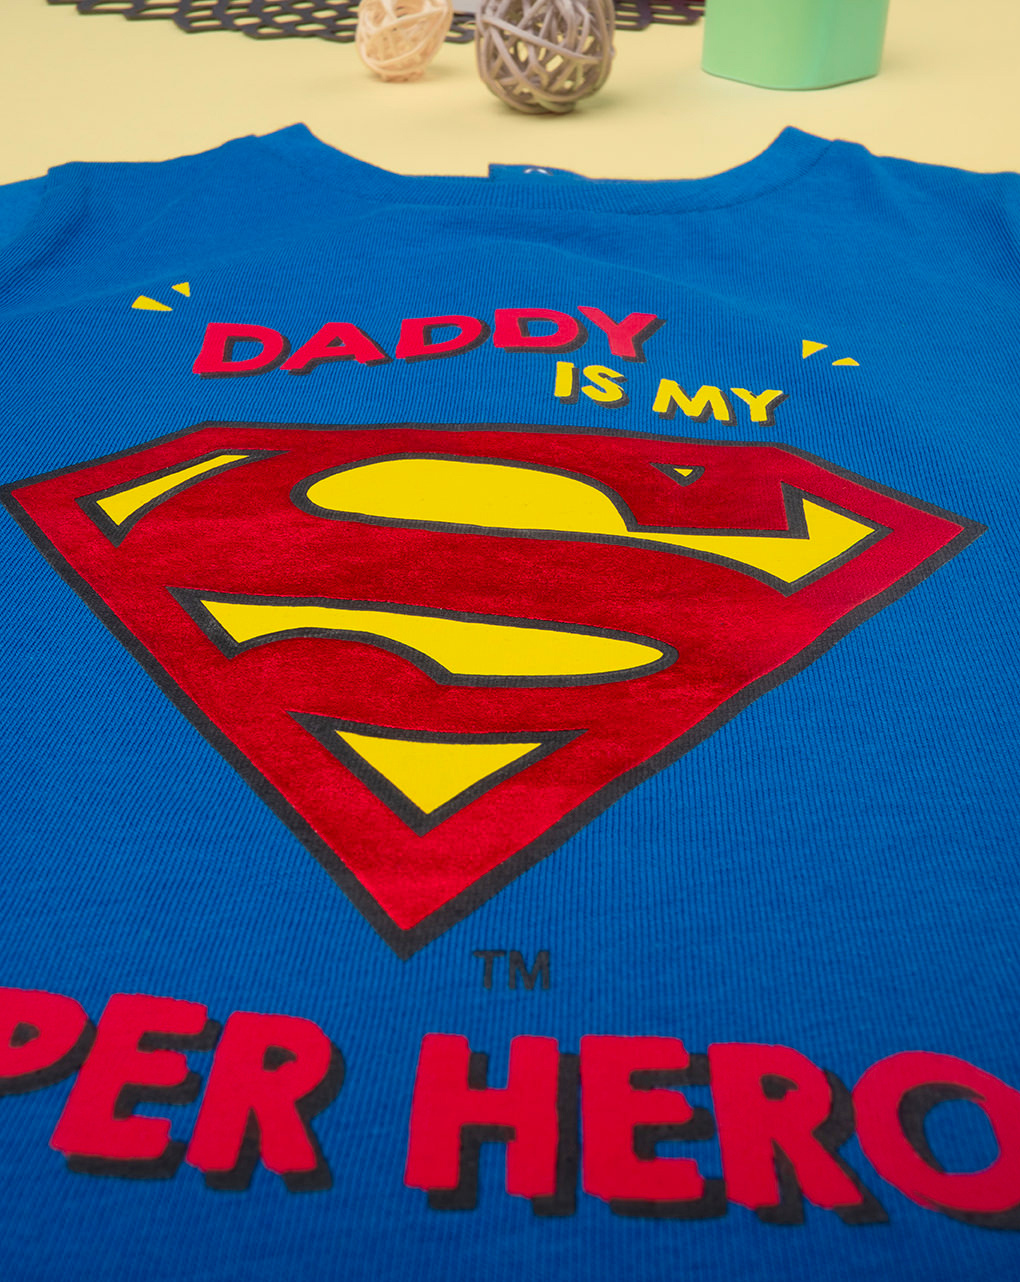 Camiseta jersey bimbo "super hero" - Prénatal